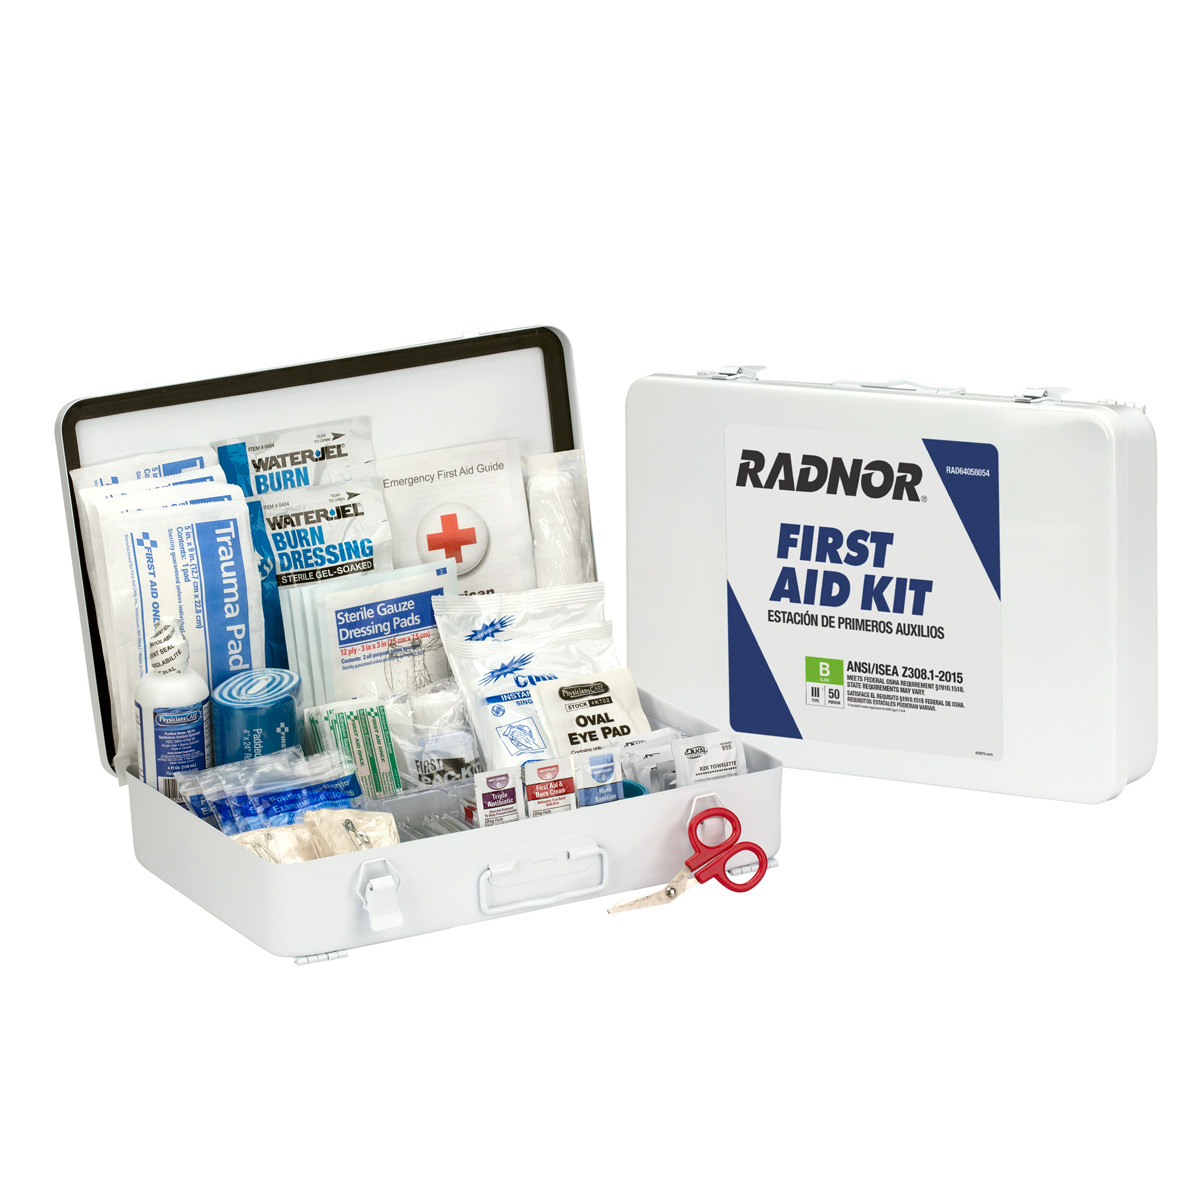 Class B 50 Person Bulk ANSI B, First Aid Kit-Type III